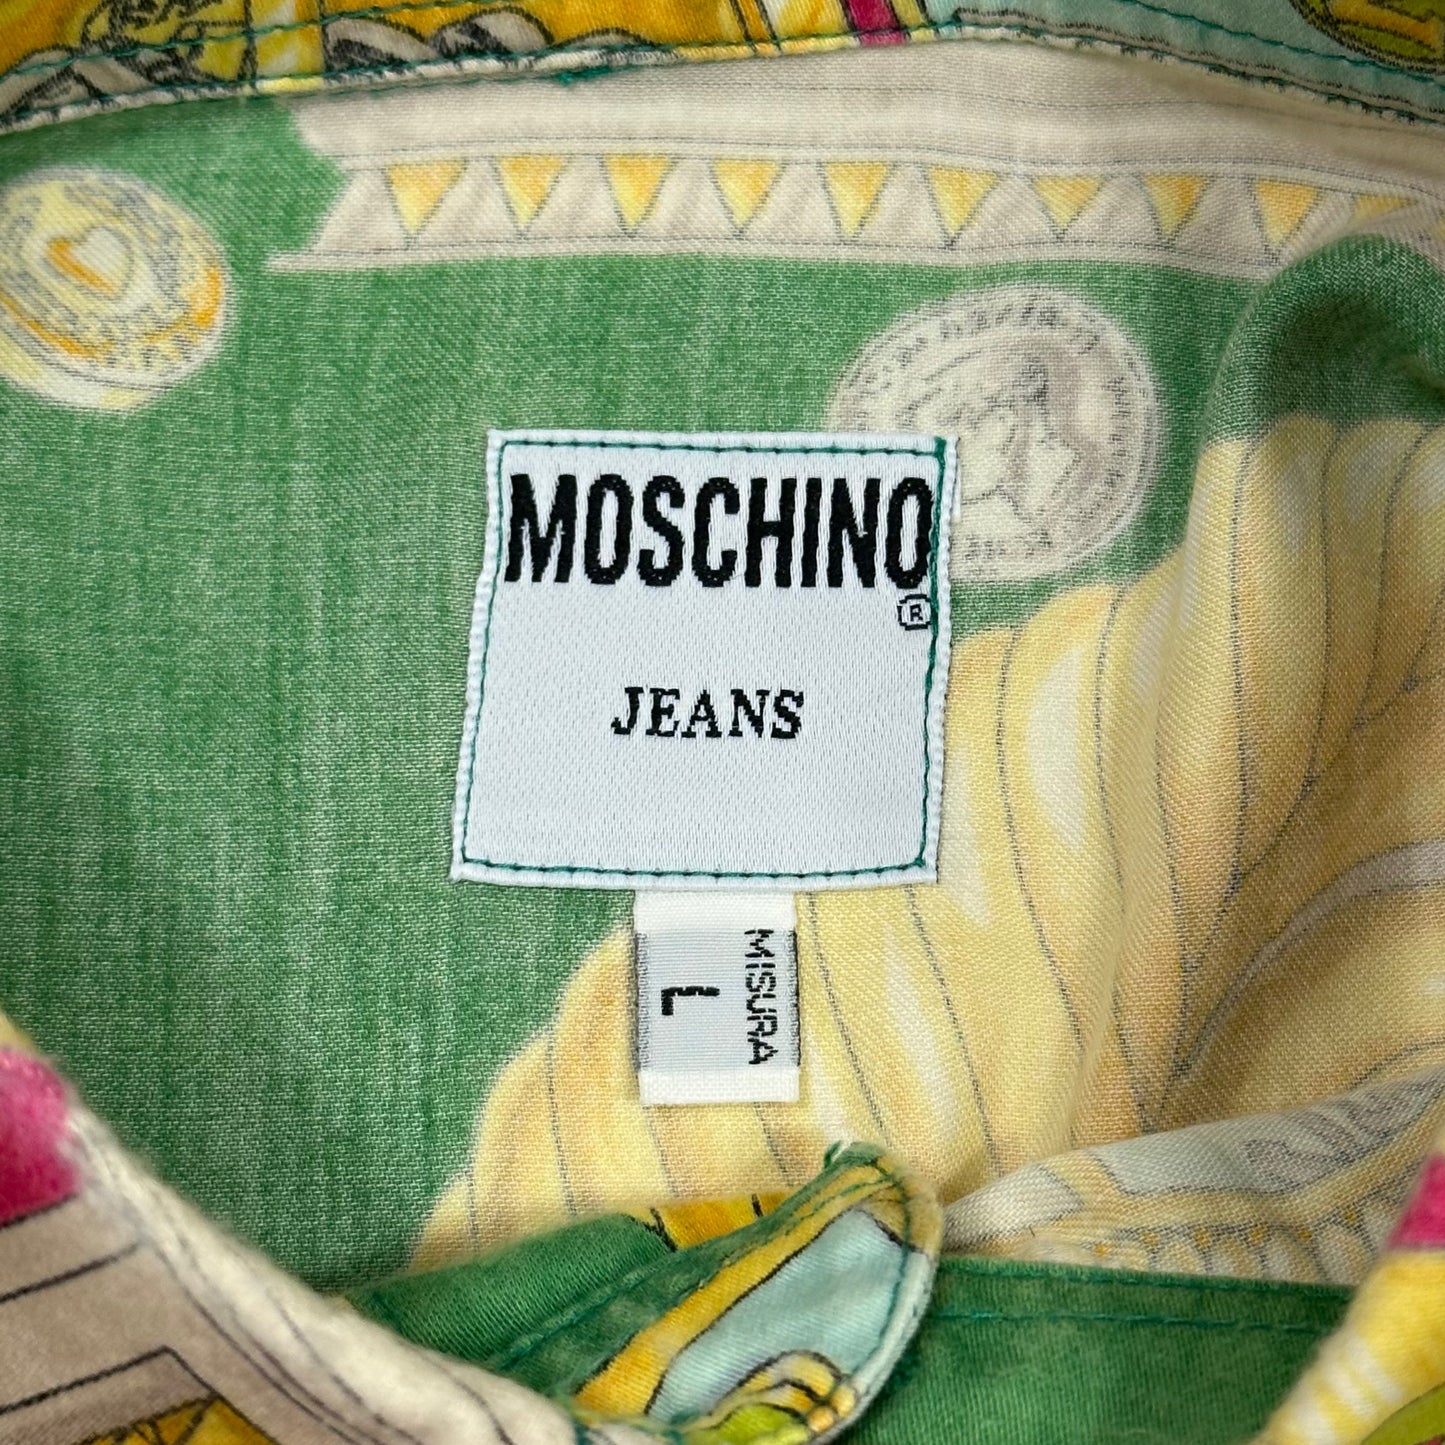 Moschino Jeans 1995 Slot Machine Shirt - L